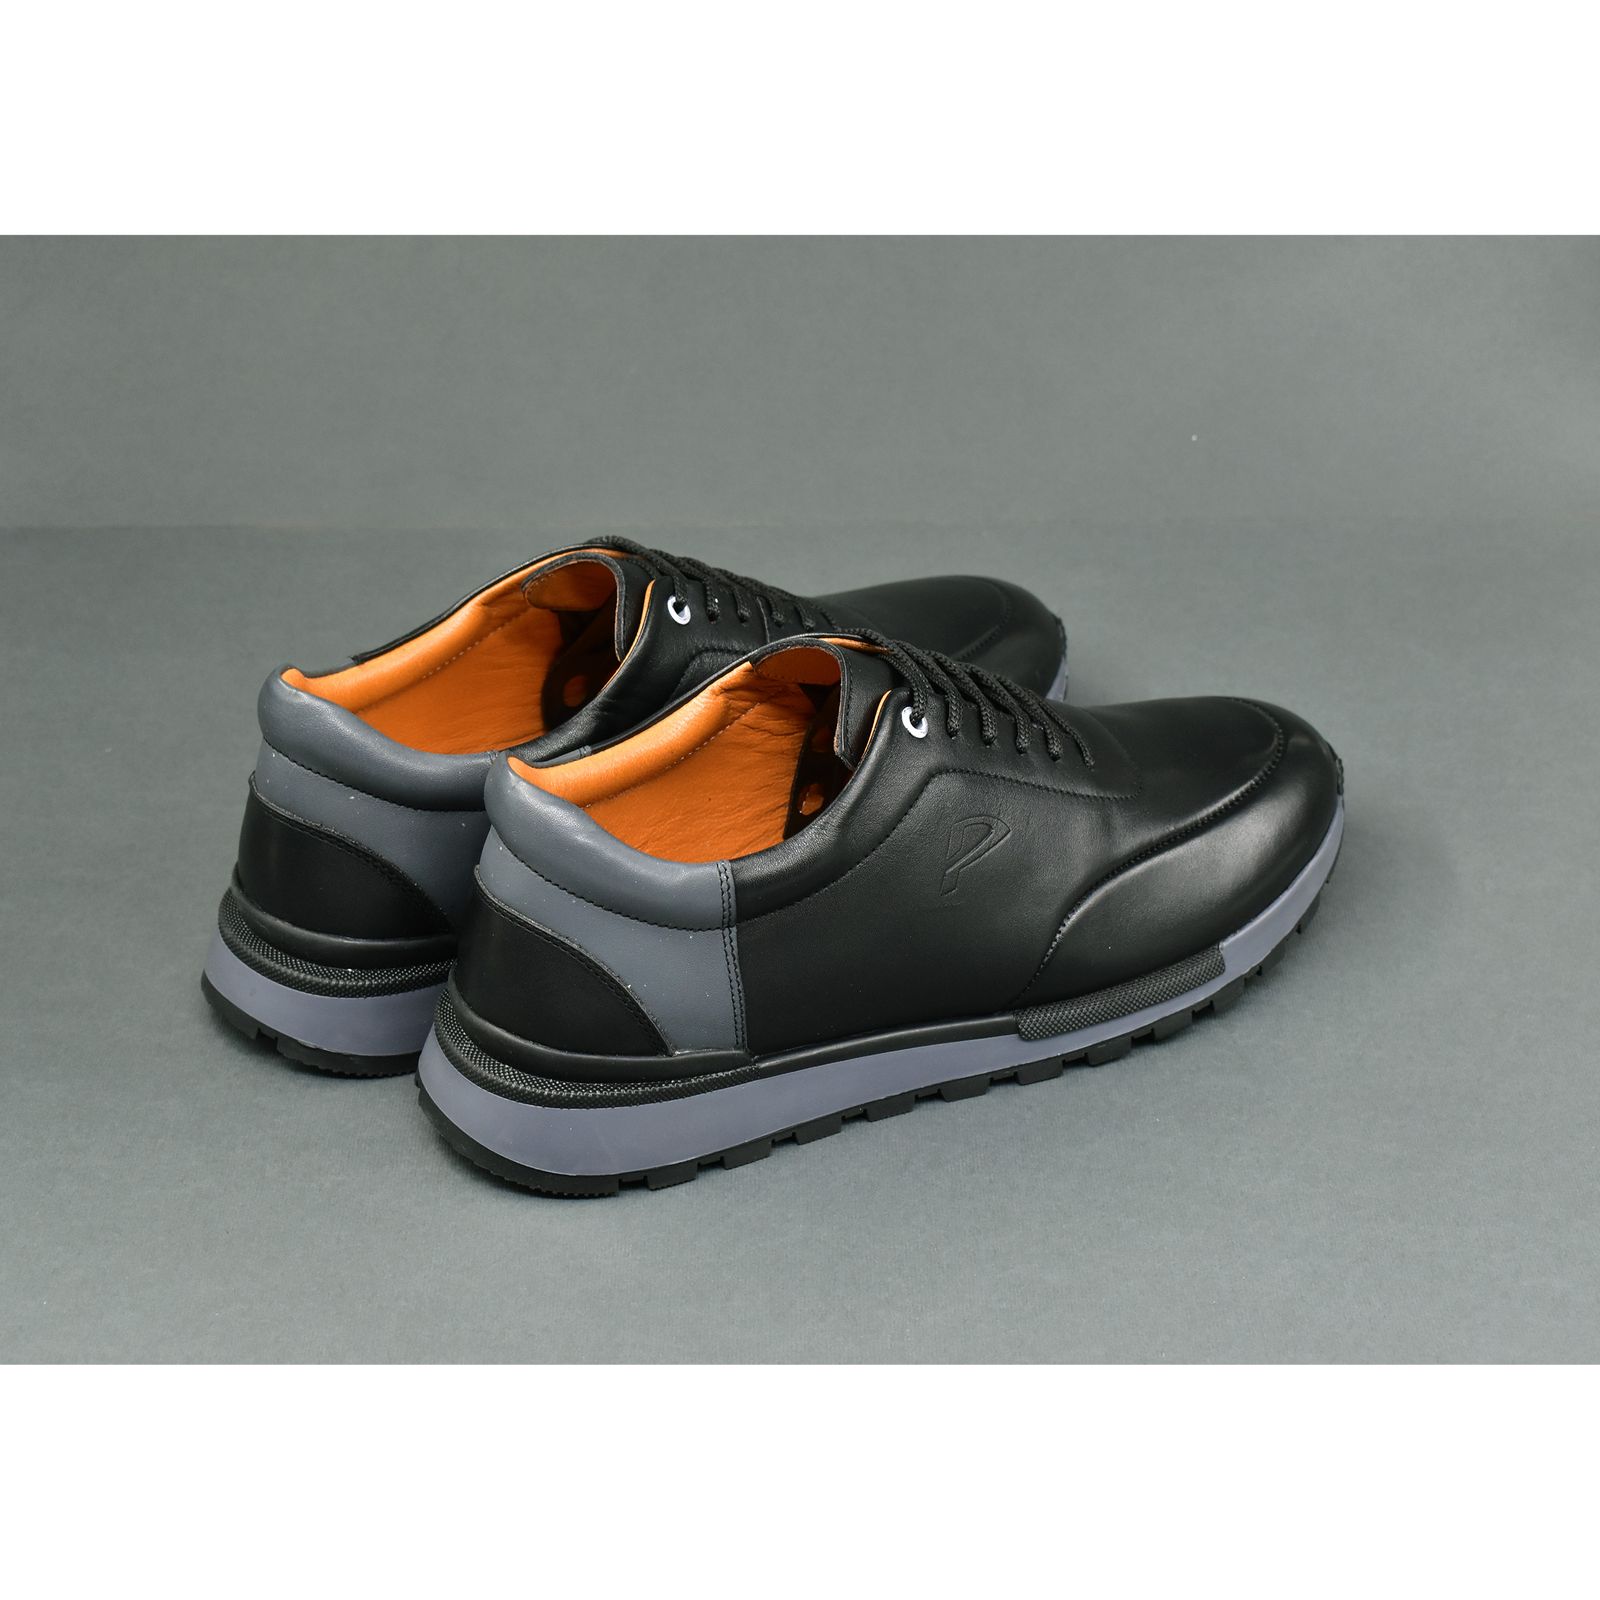 کفش روزمره مردانه پاما مدل ME-680 کد G1807 -  - 4